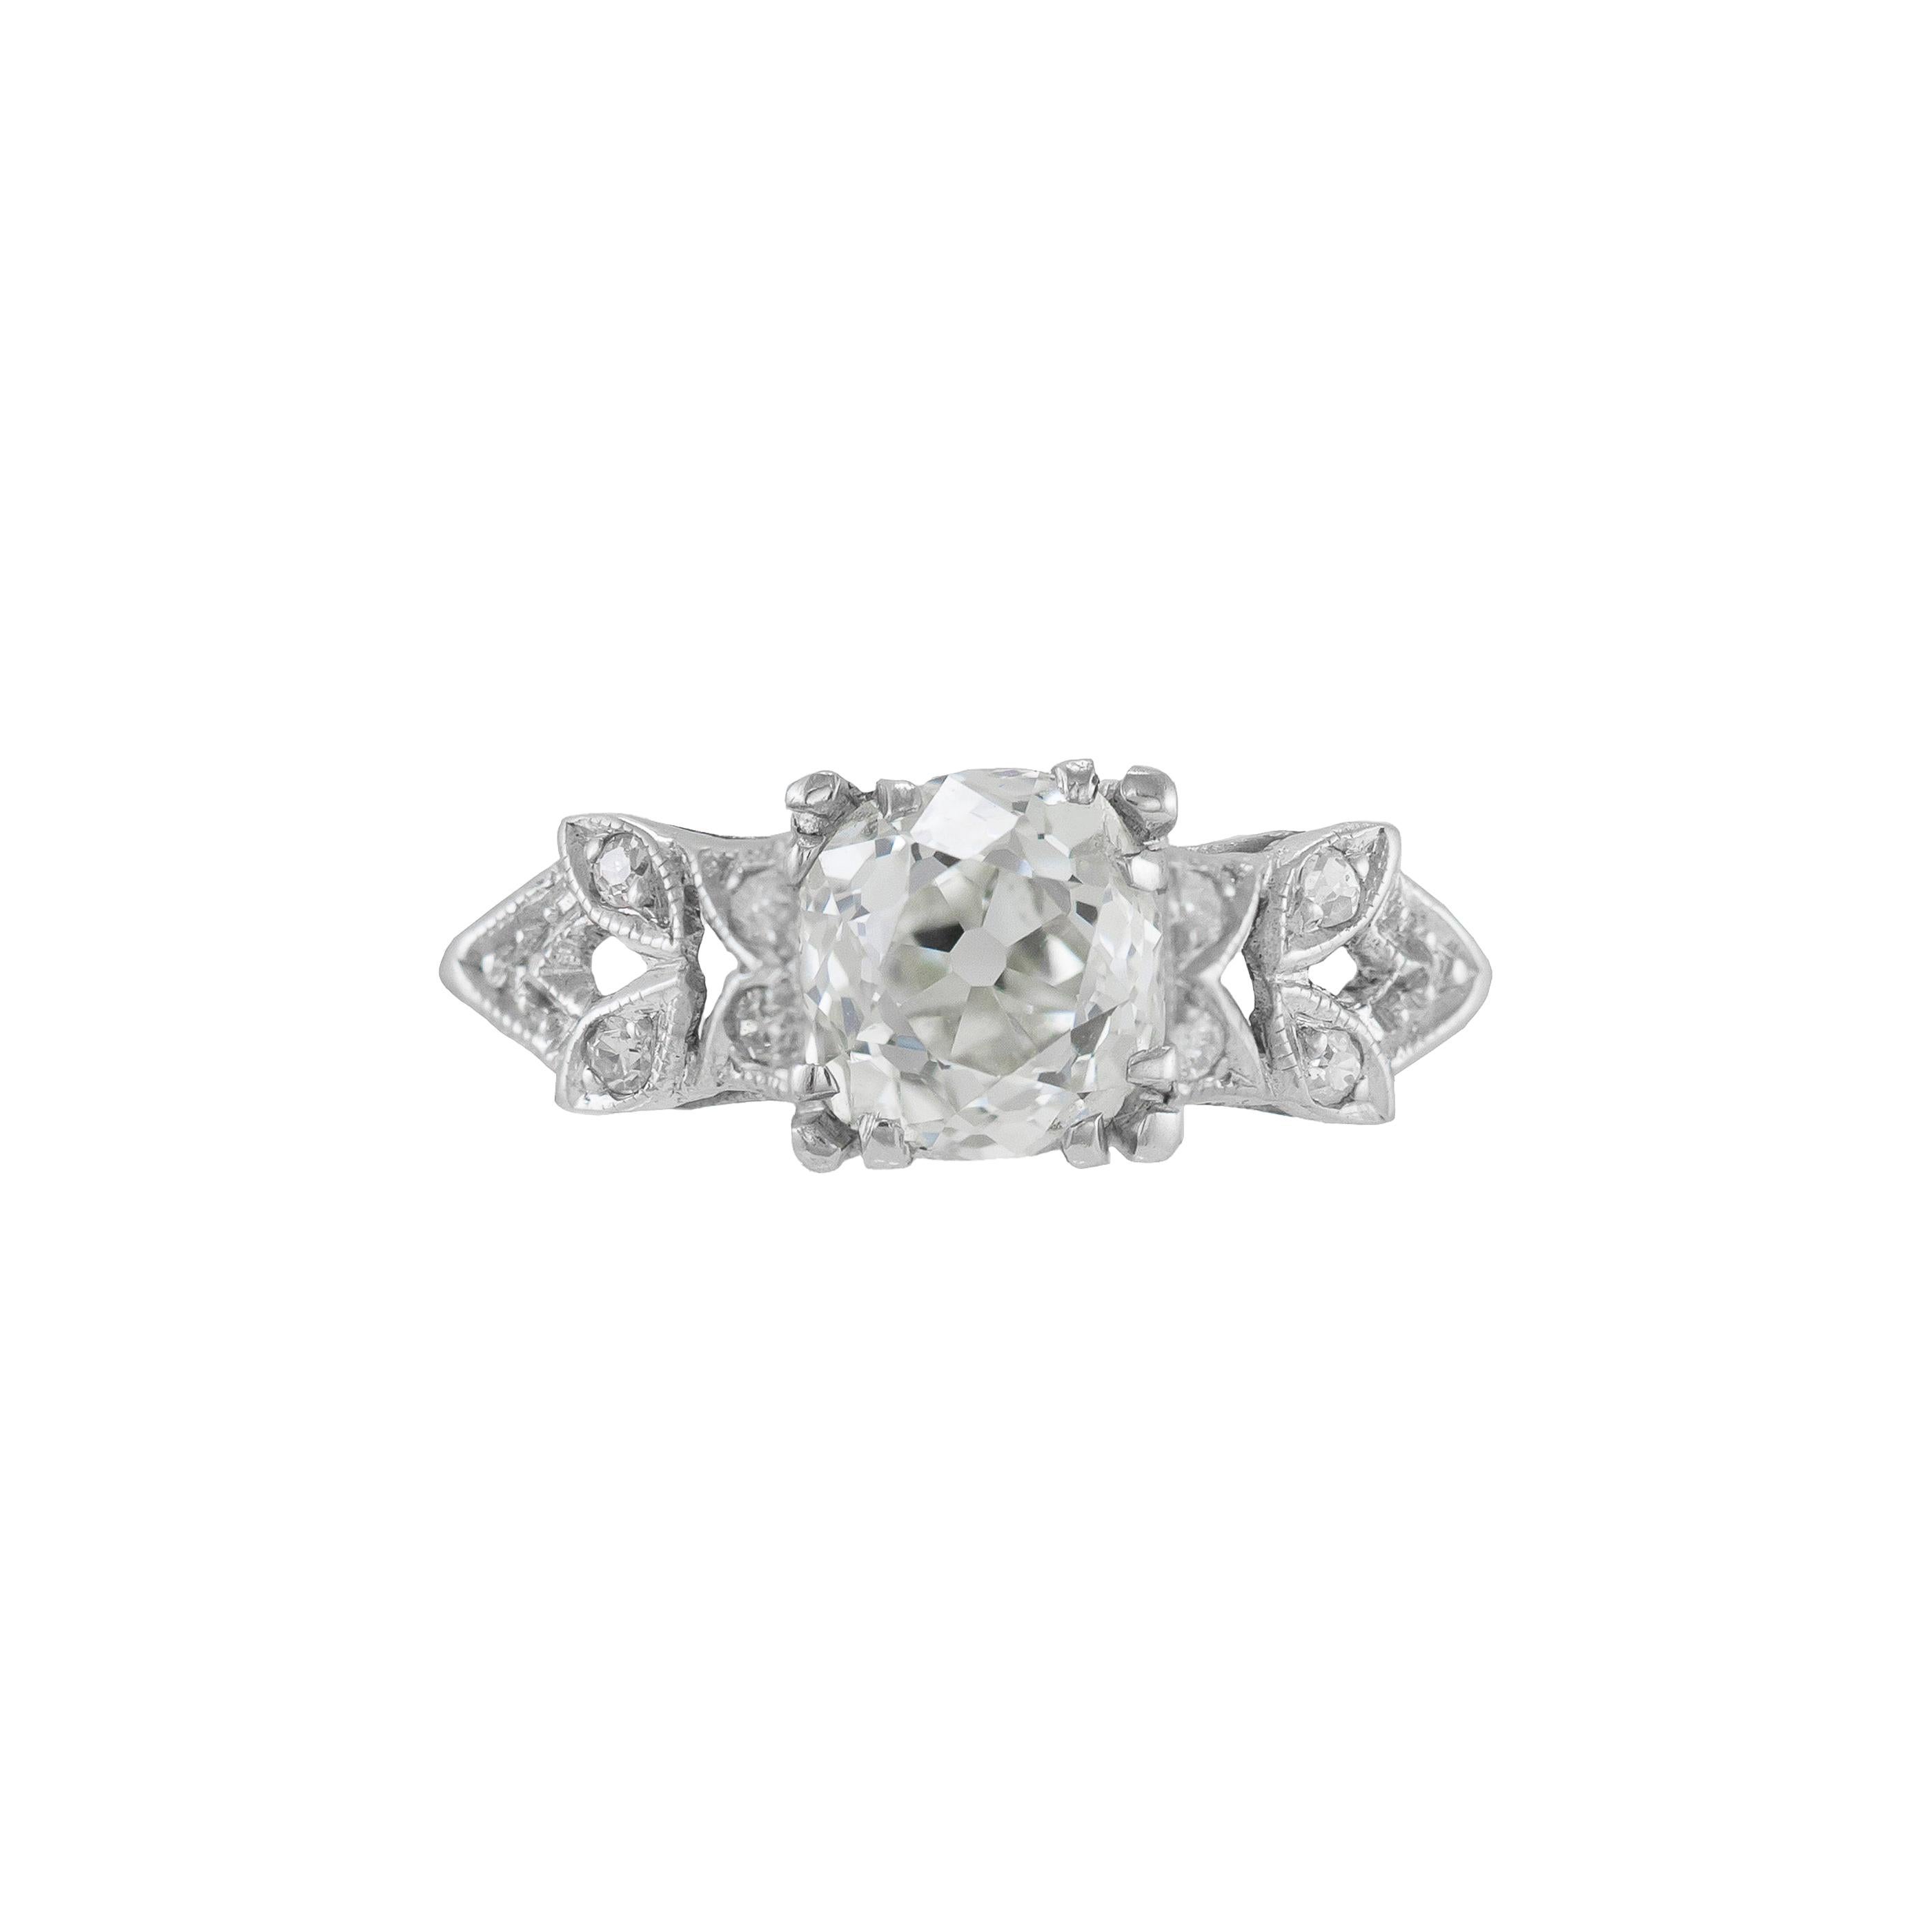 1.17 Carat Art Deco Diamond Ring